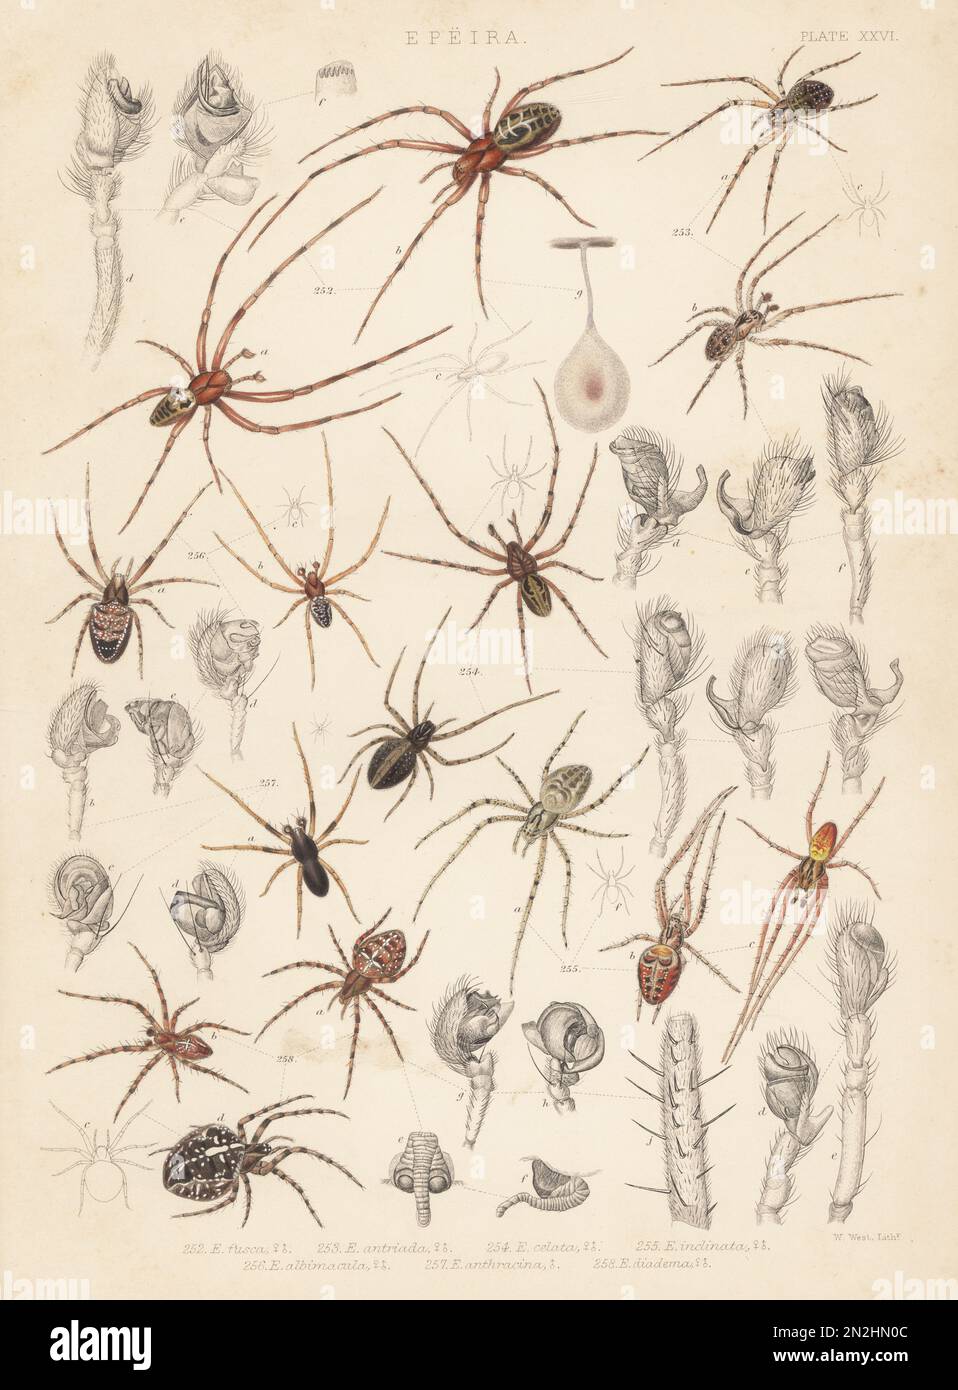 European cave spider, Meta menardi (Epeira fusca) 252, Metellina merianae (E. antriada) 253, Metellina merianae var. celata (E. celata) 254, Metellina segmentata (E. inclinata) 255, orbweaver, Zilla diodia (E. albimacula) 256, Hypsosinga pygmaea (E. anthracina) 257, and garden or diadem spider, Araneus diadematus (E. diadema) 258. Handcoloured lithograph by W. West from John Blackwall’s A History of the Spiders of Great Britain and Ireland, Ray Society, London, 1861. Stock Photo